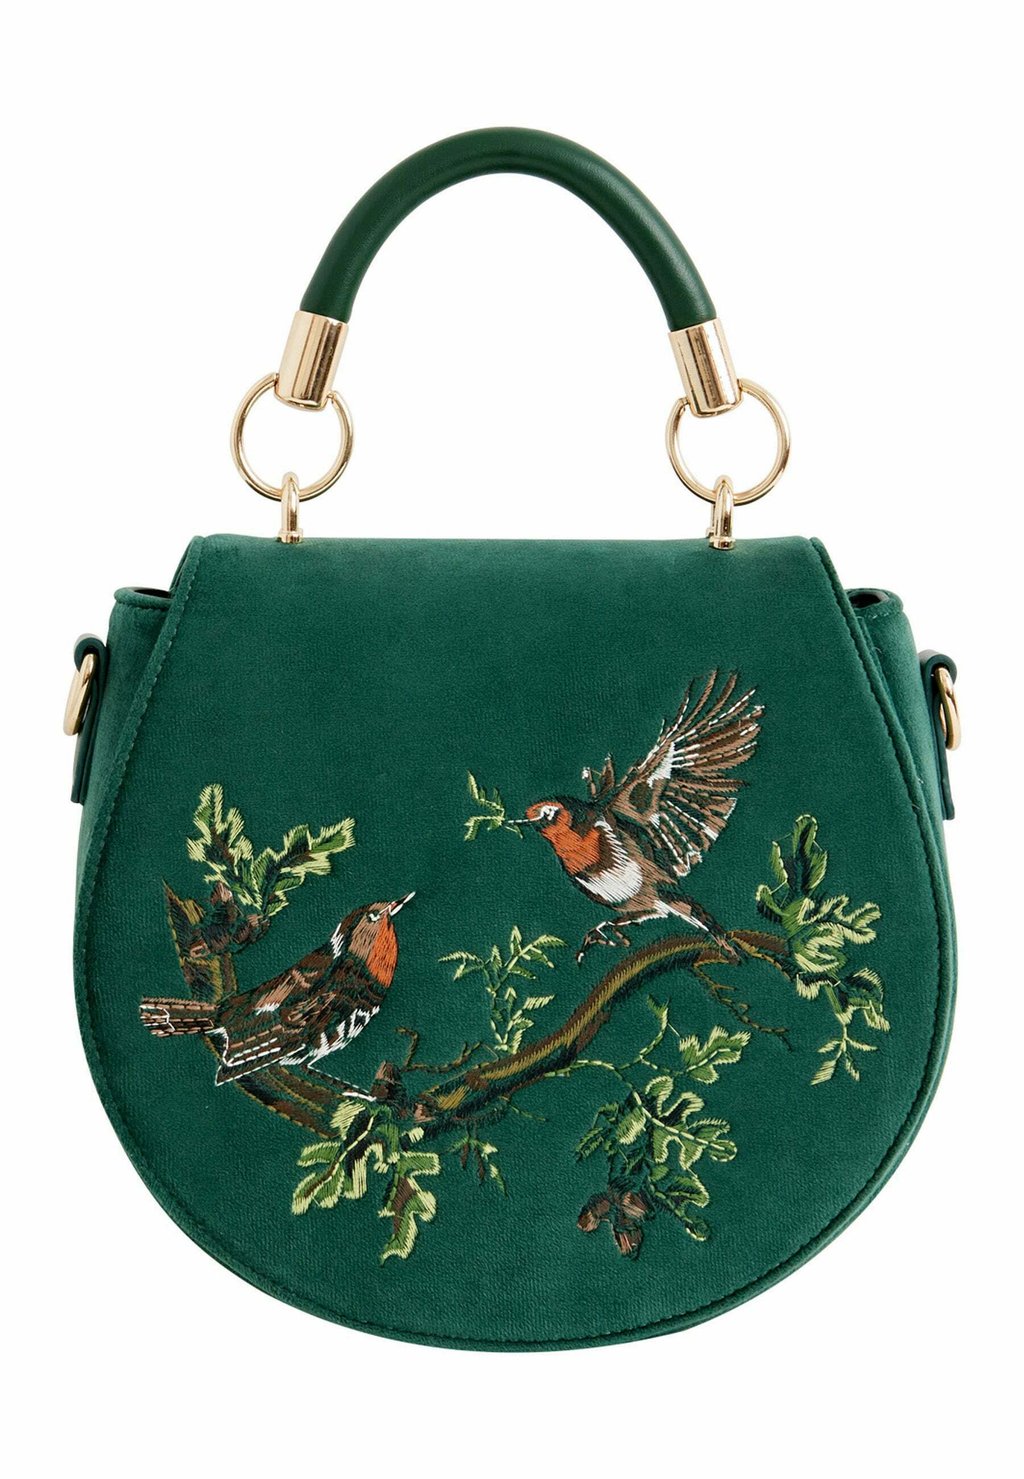 Сумочка Robin Love Embroidered Saddle FABLE ENGLAND, зеленый сумка fox mushroom embroidered saddle redcurrant fable england цвет red